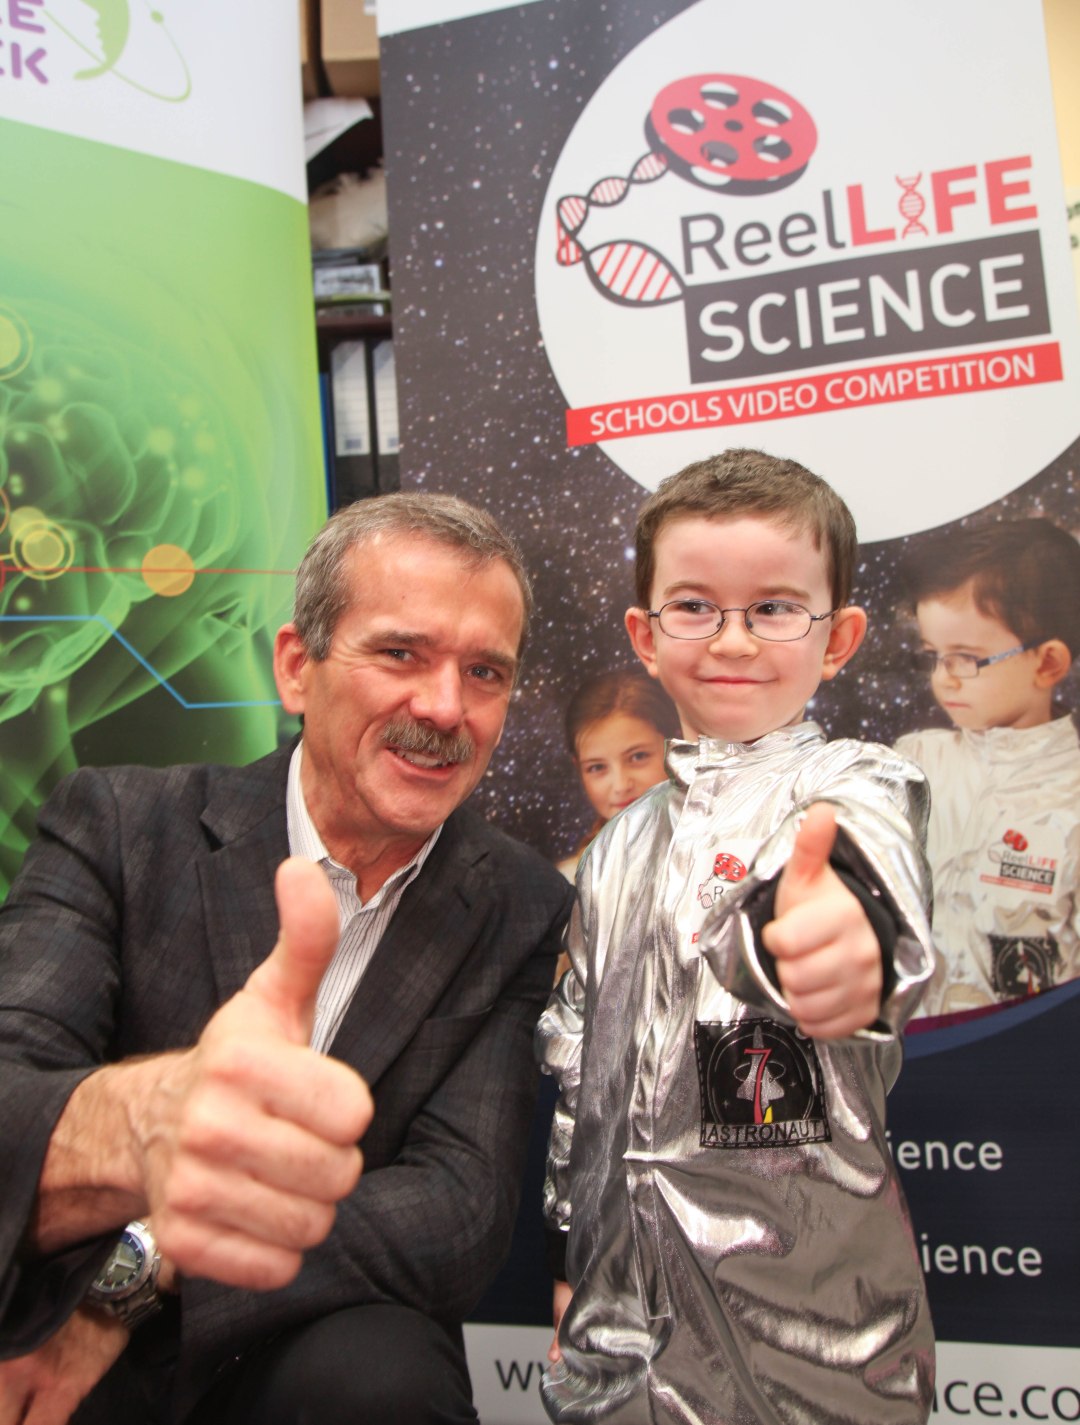 ReelLIFE SCIENCE Meets Cmdr. Chris Hadfield! – ReelLIFE SCIENCE